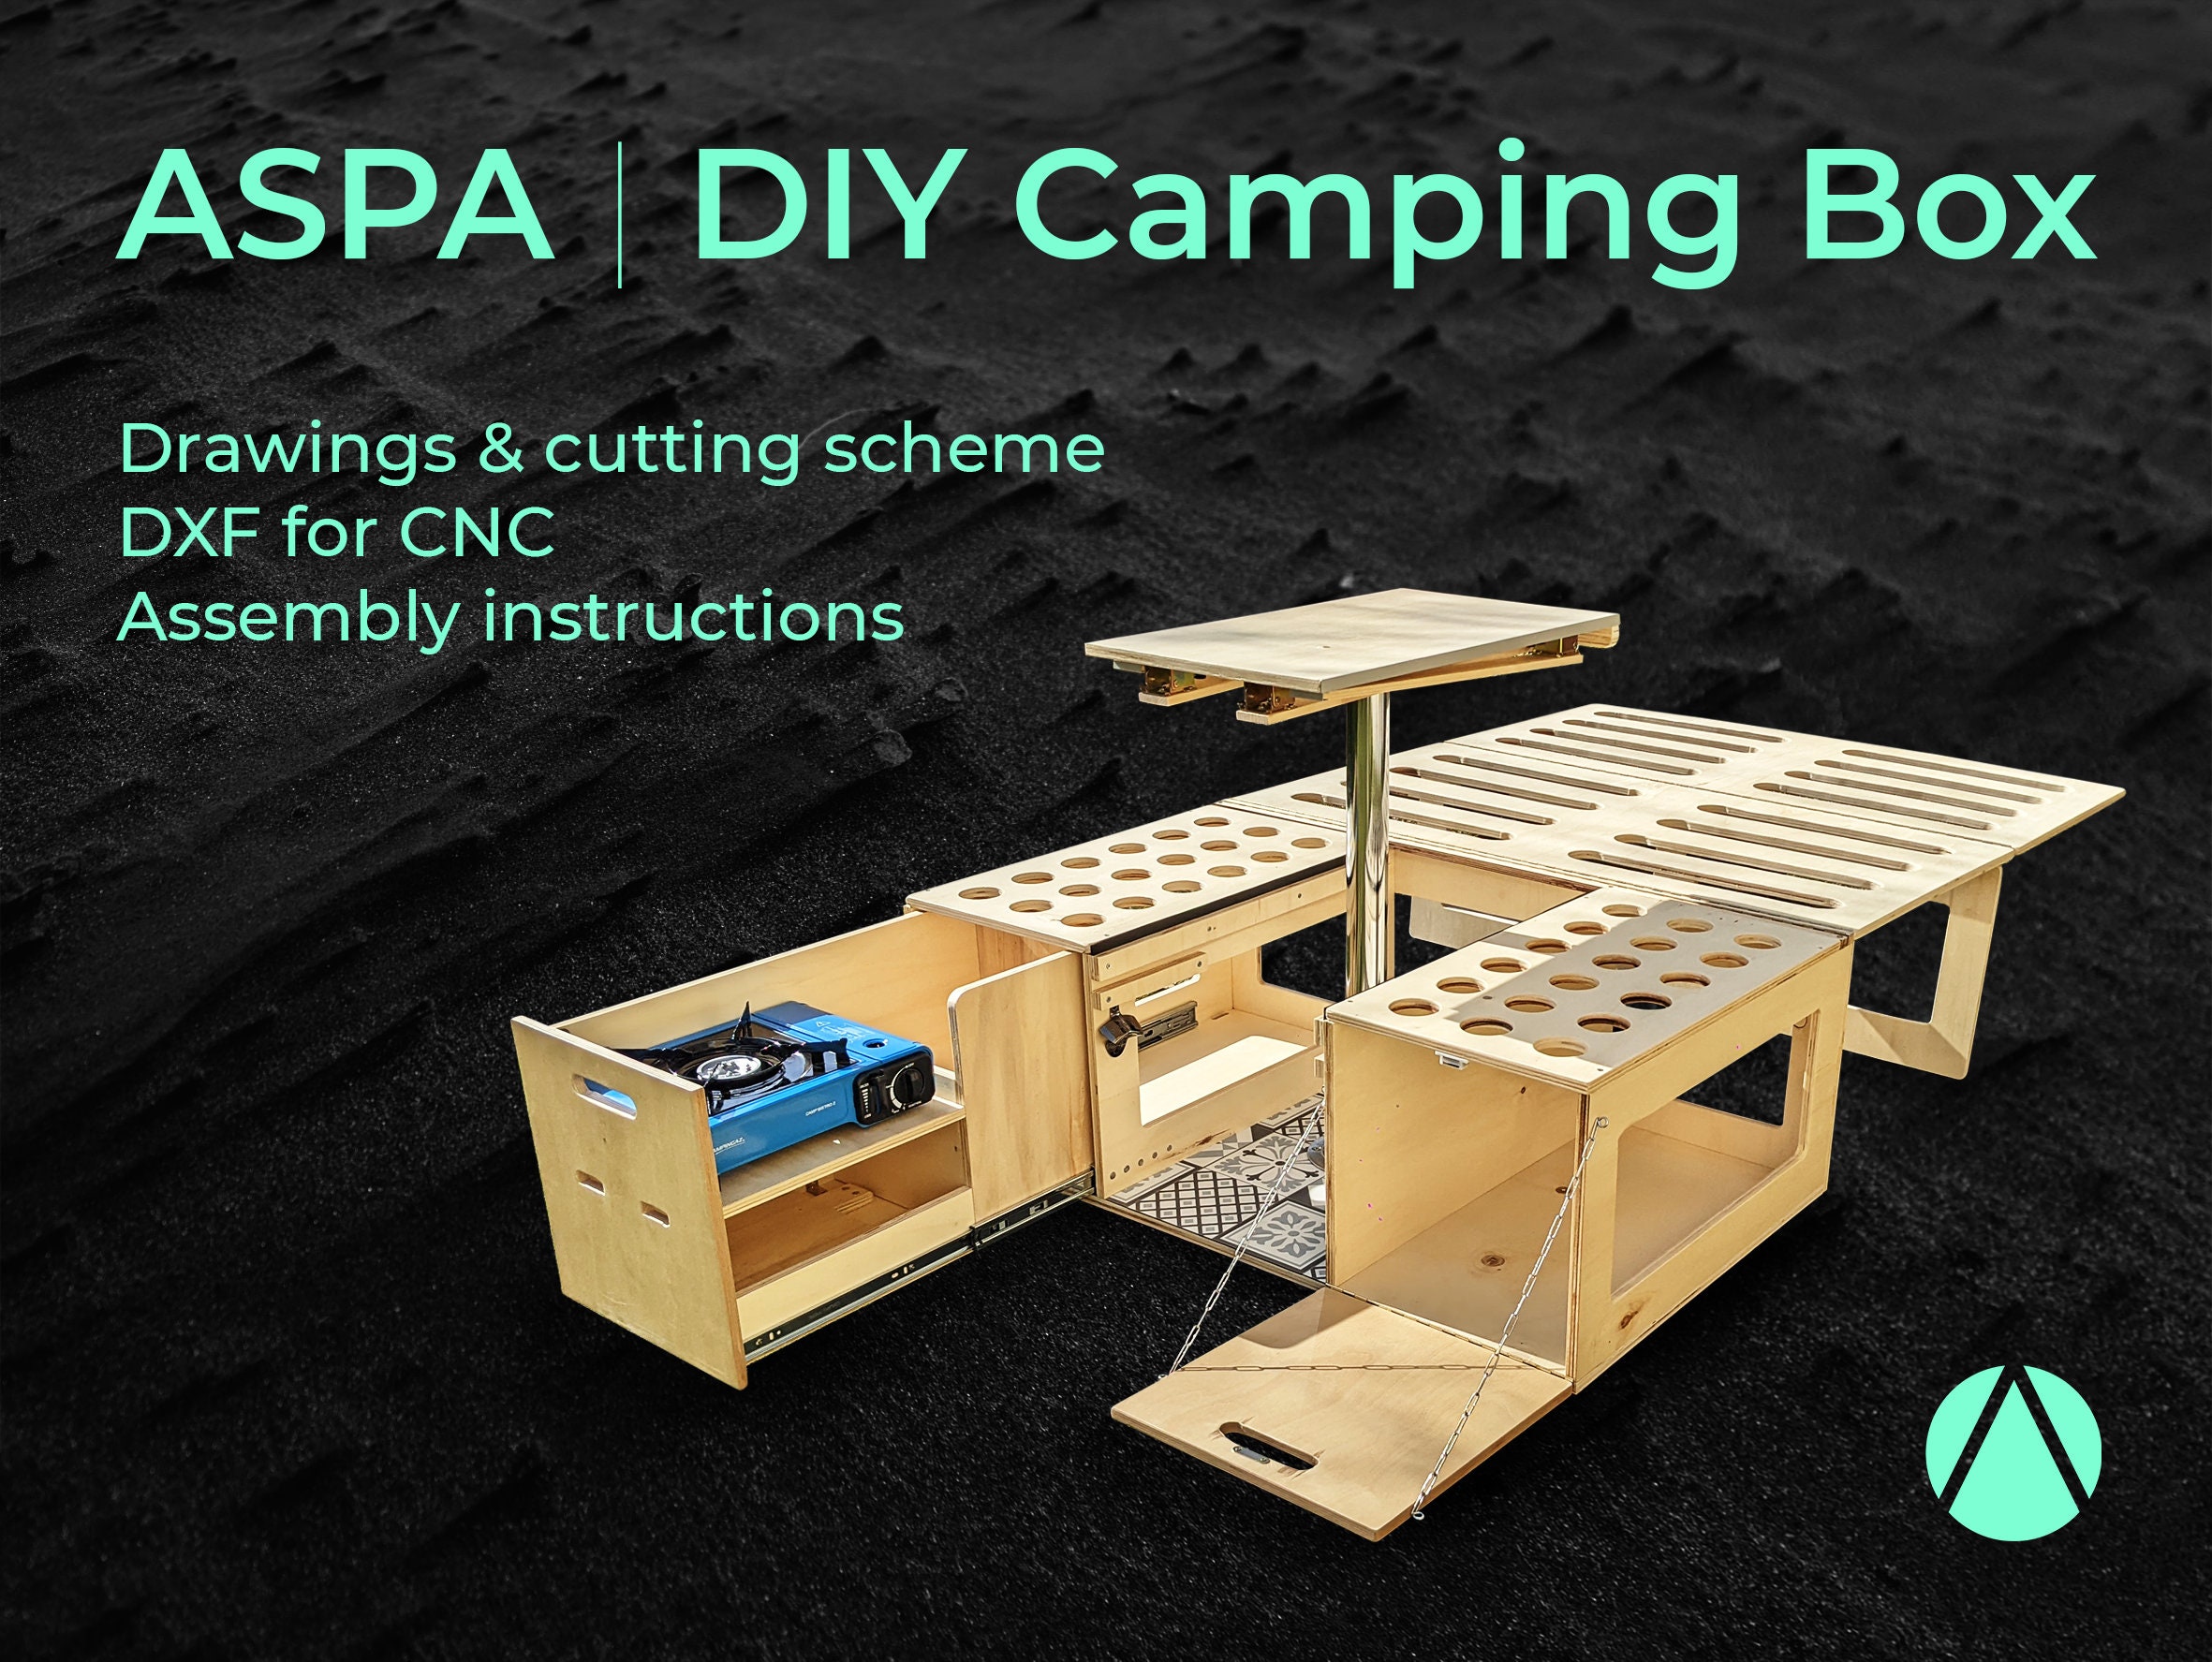 ASPA | Camping Box DIY | Drawings, DXF files & Assembly instructions